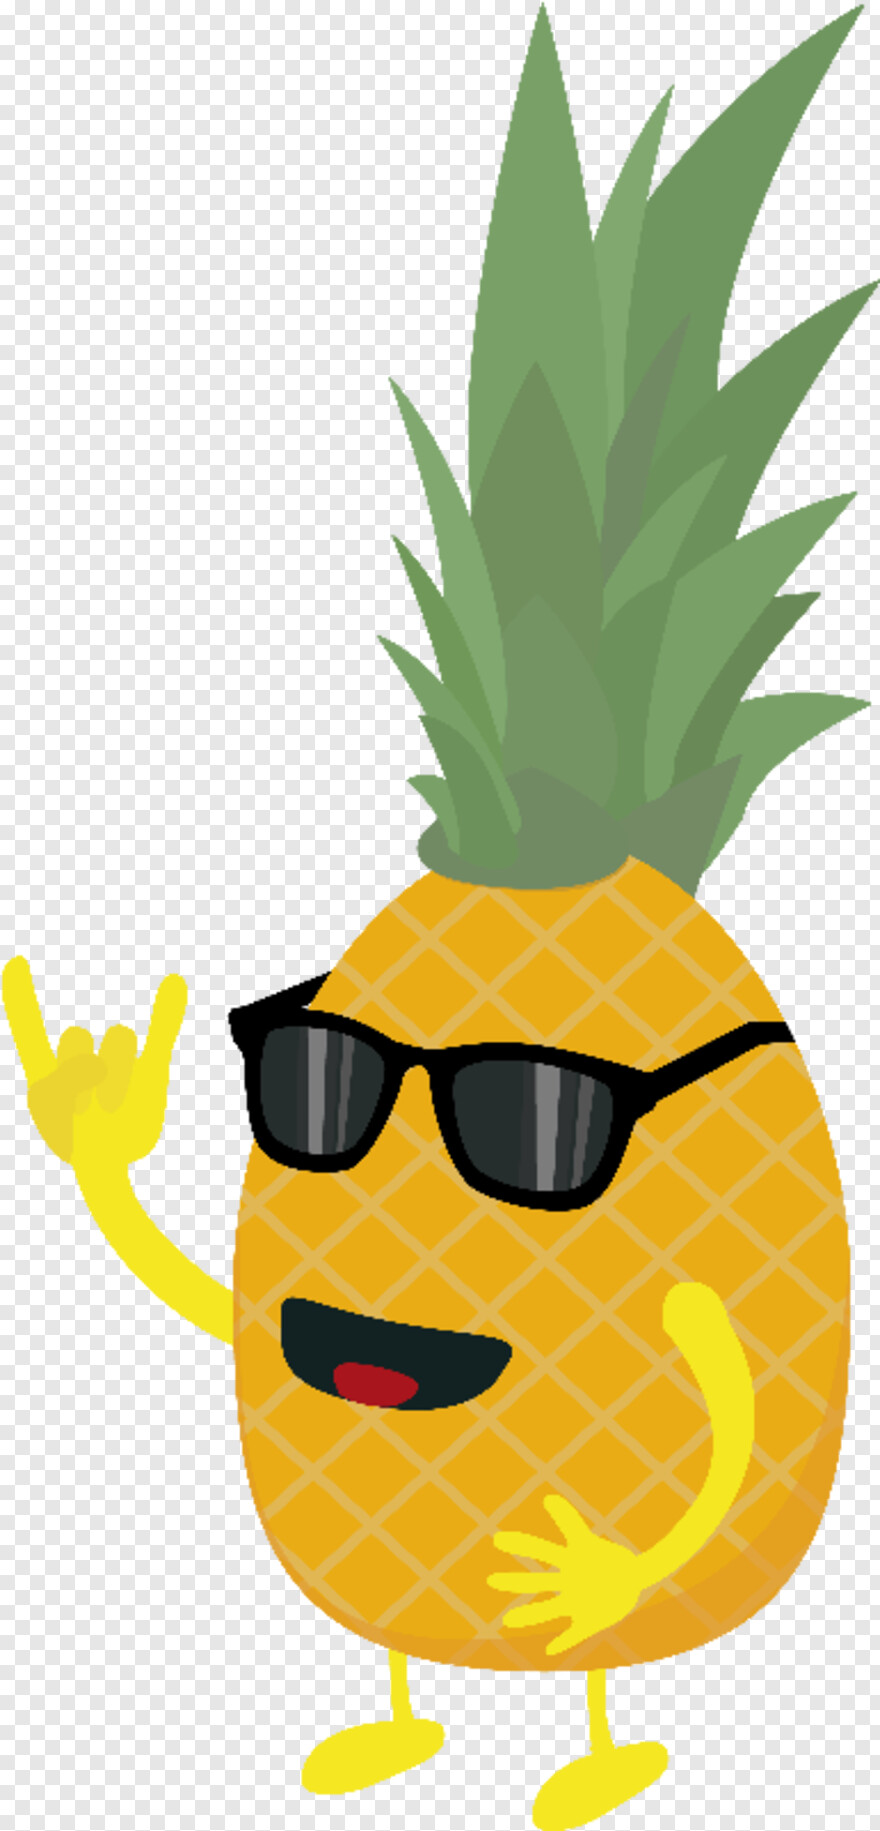 pineapple # 767234